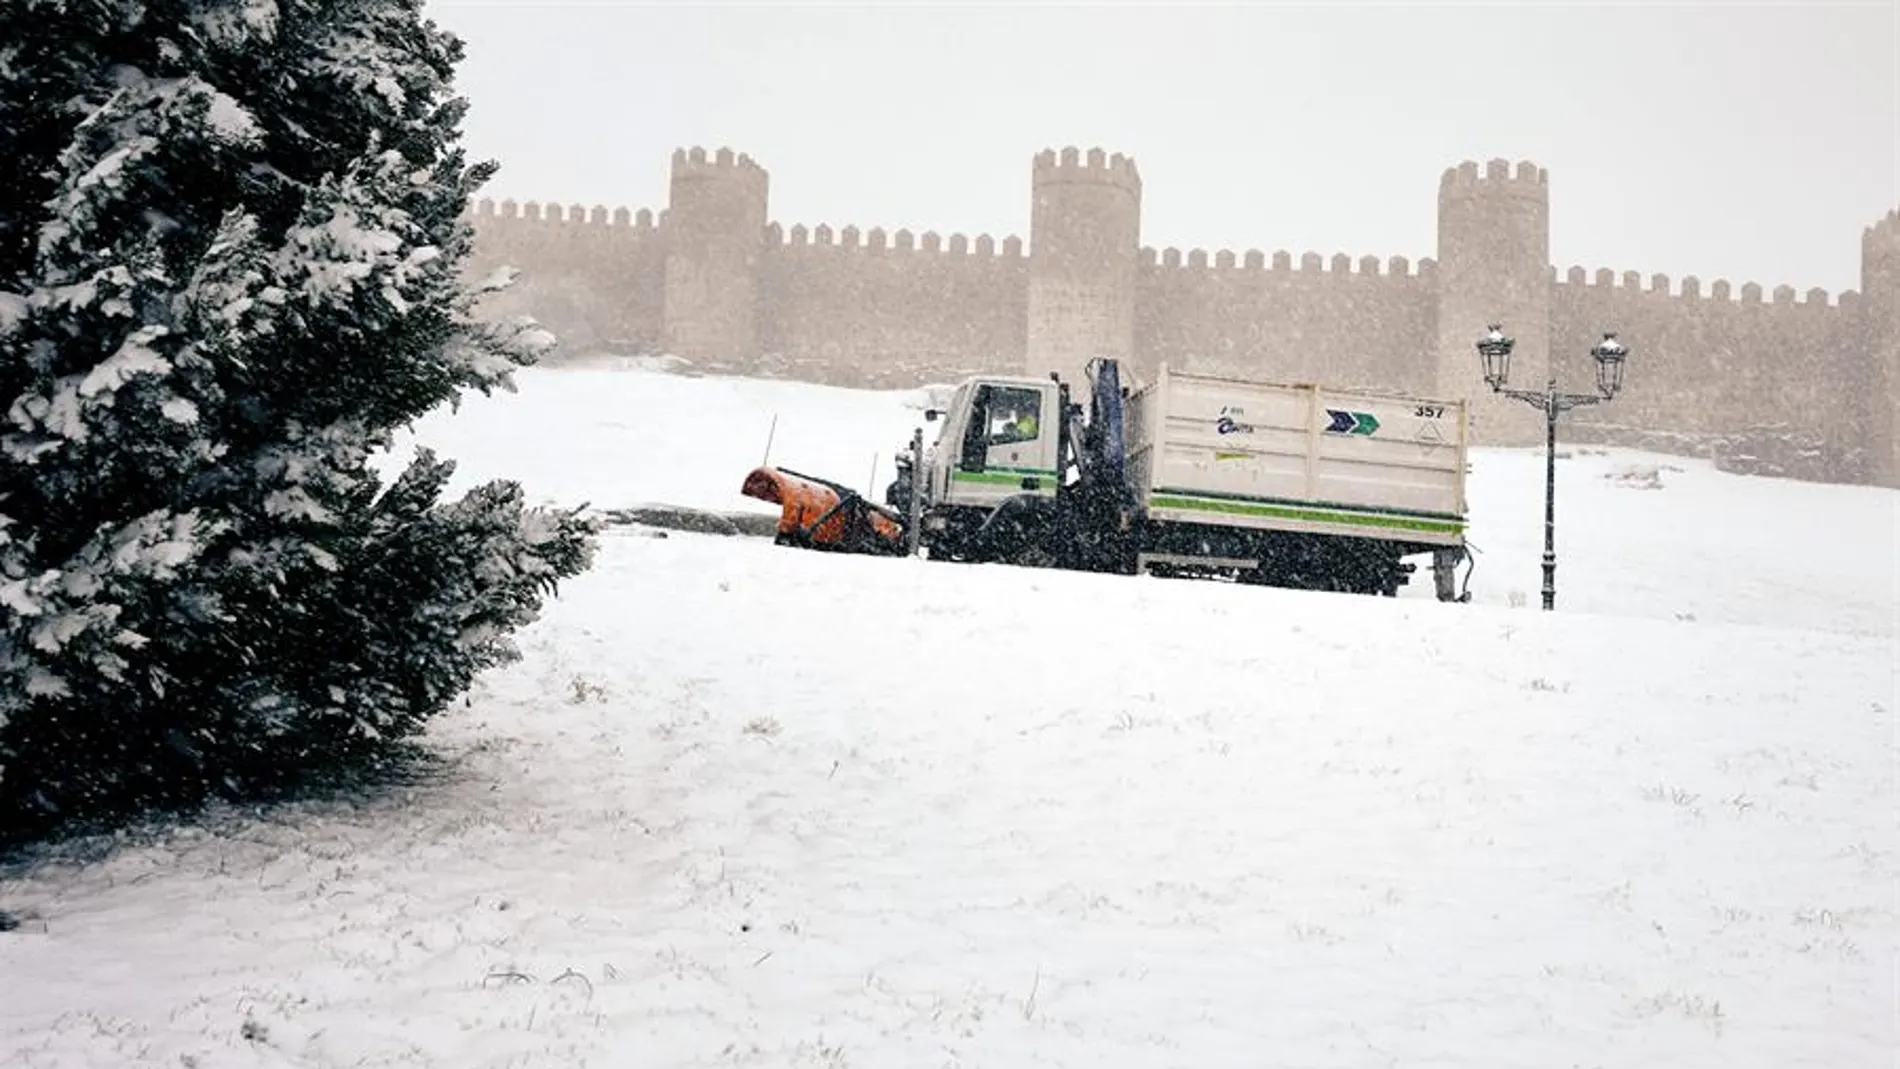 Una máquina quitanieves retira la nieve junto a la muralla de Ávila